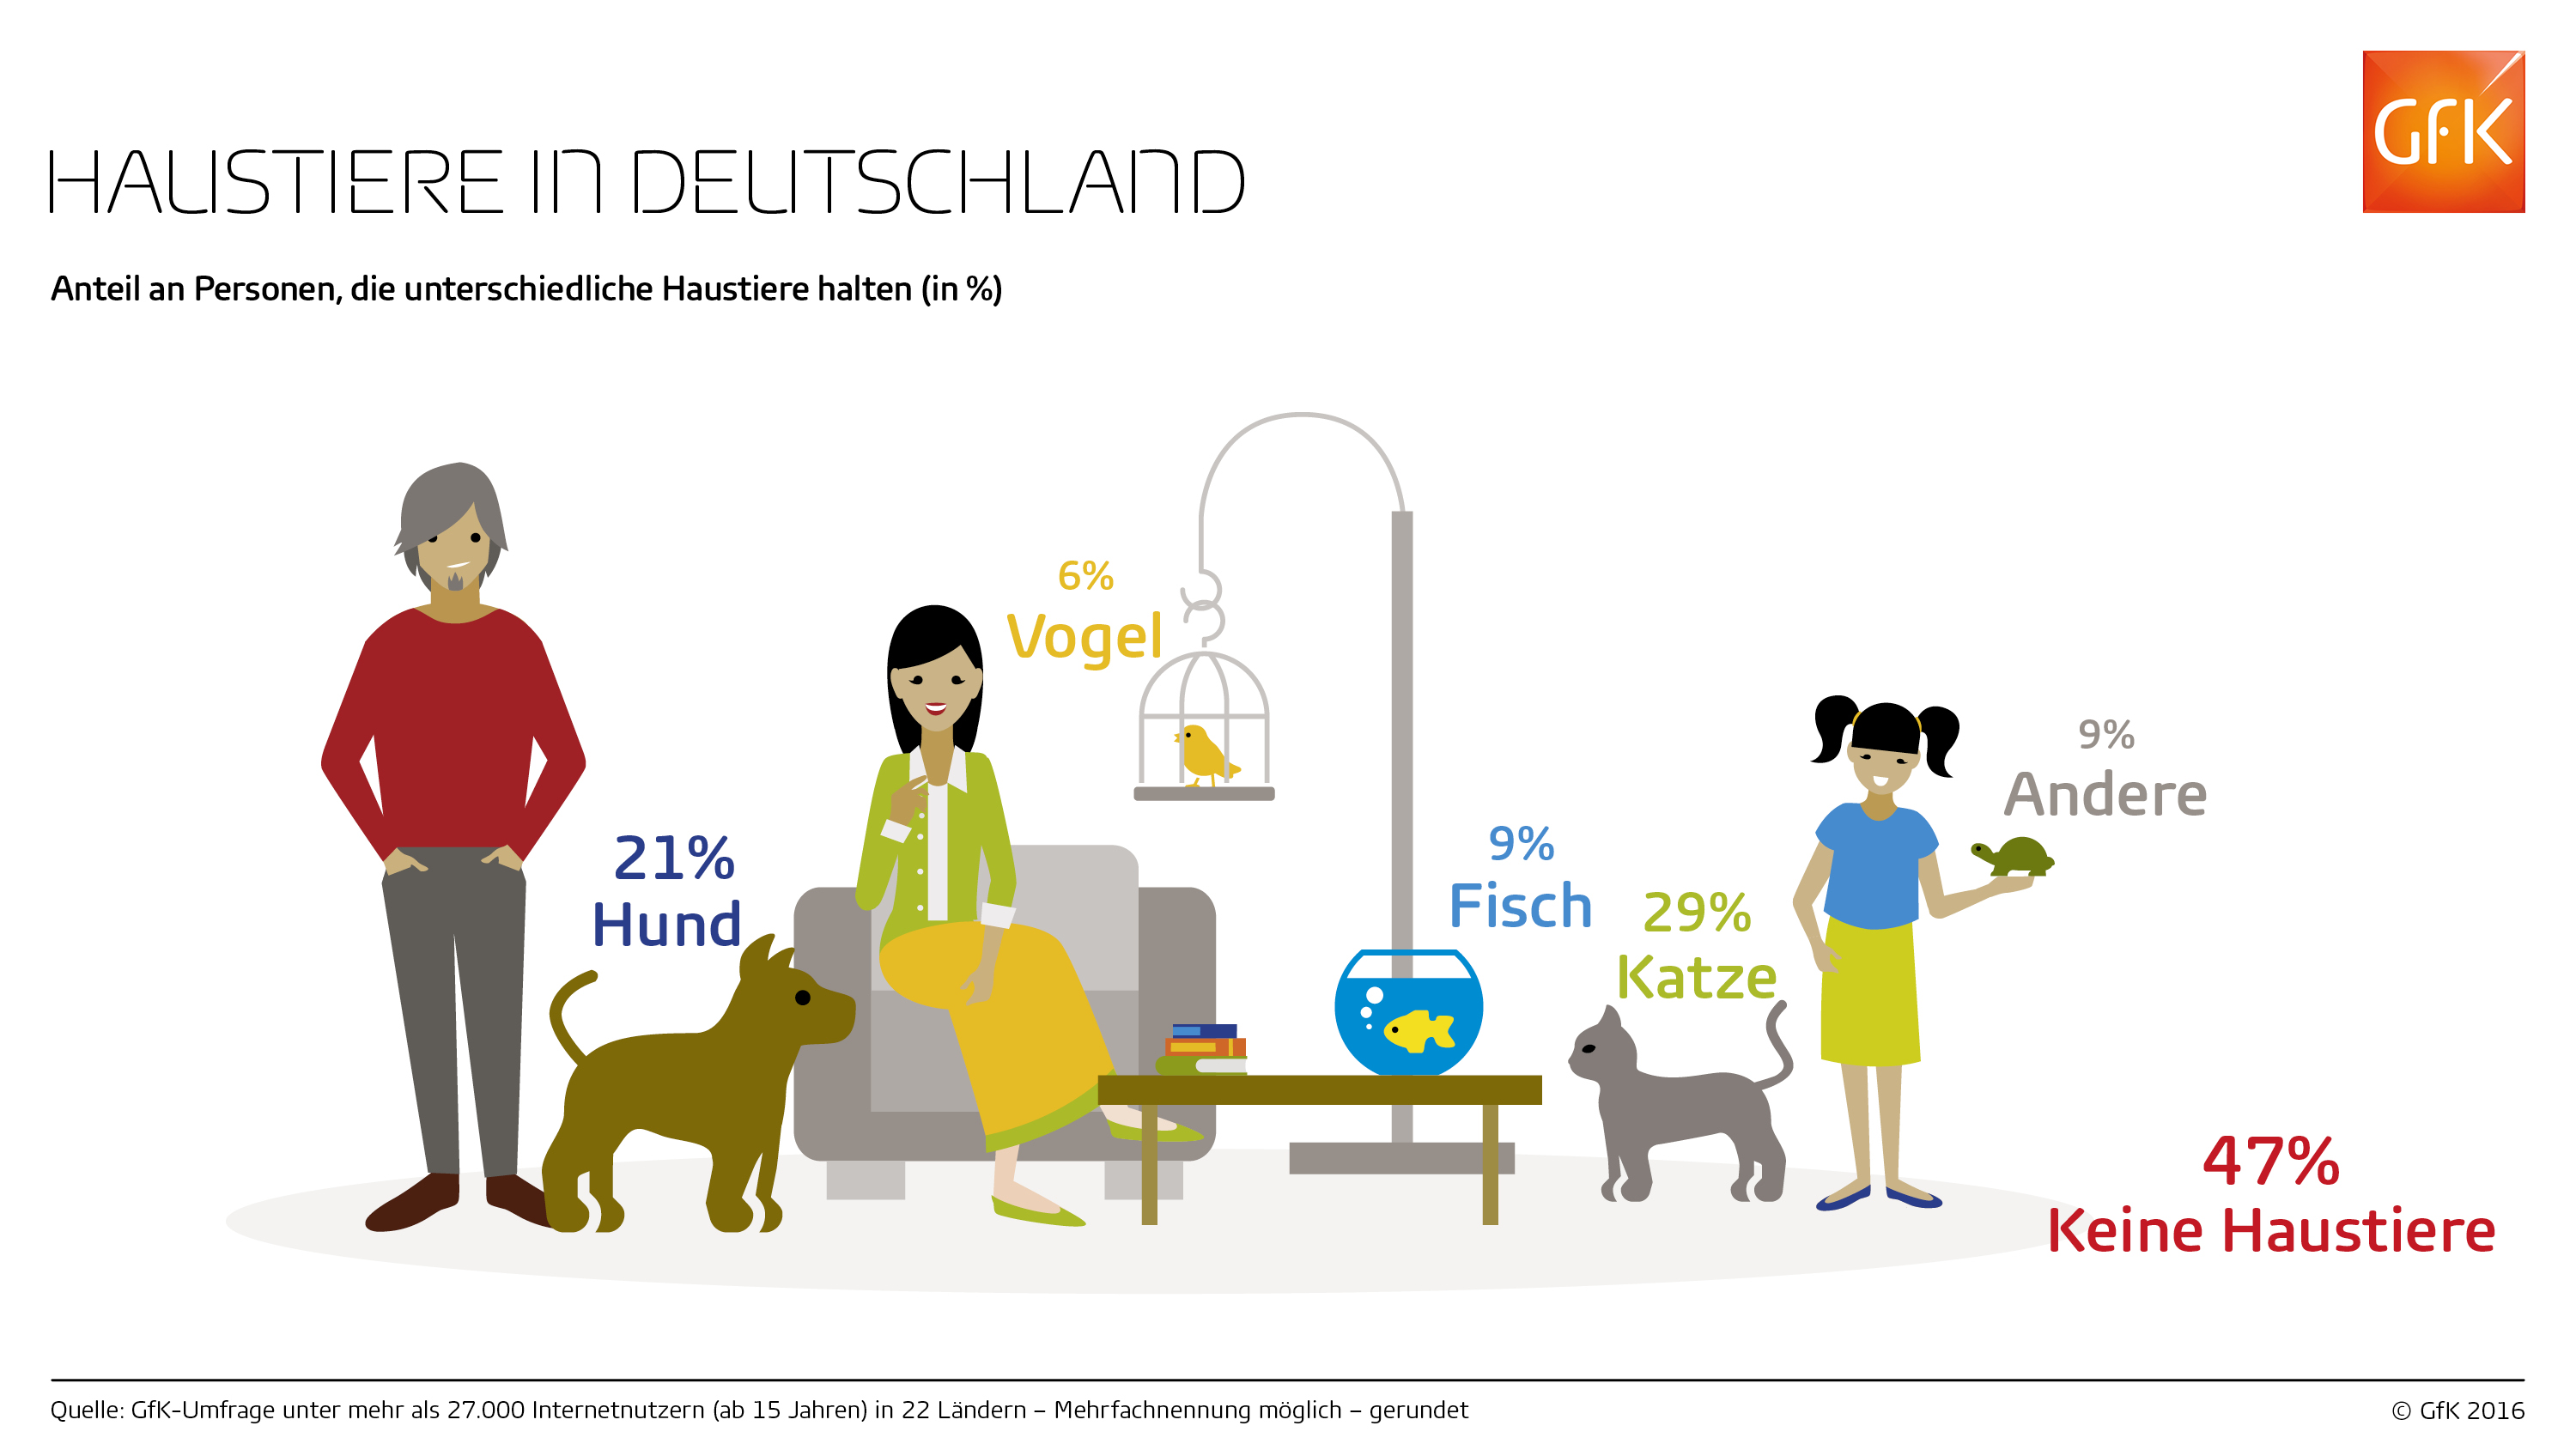 Haustiere_in_Deutschland_GfK_Infografik veterinary animal physical diagram 